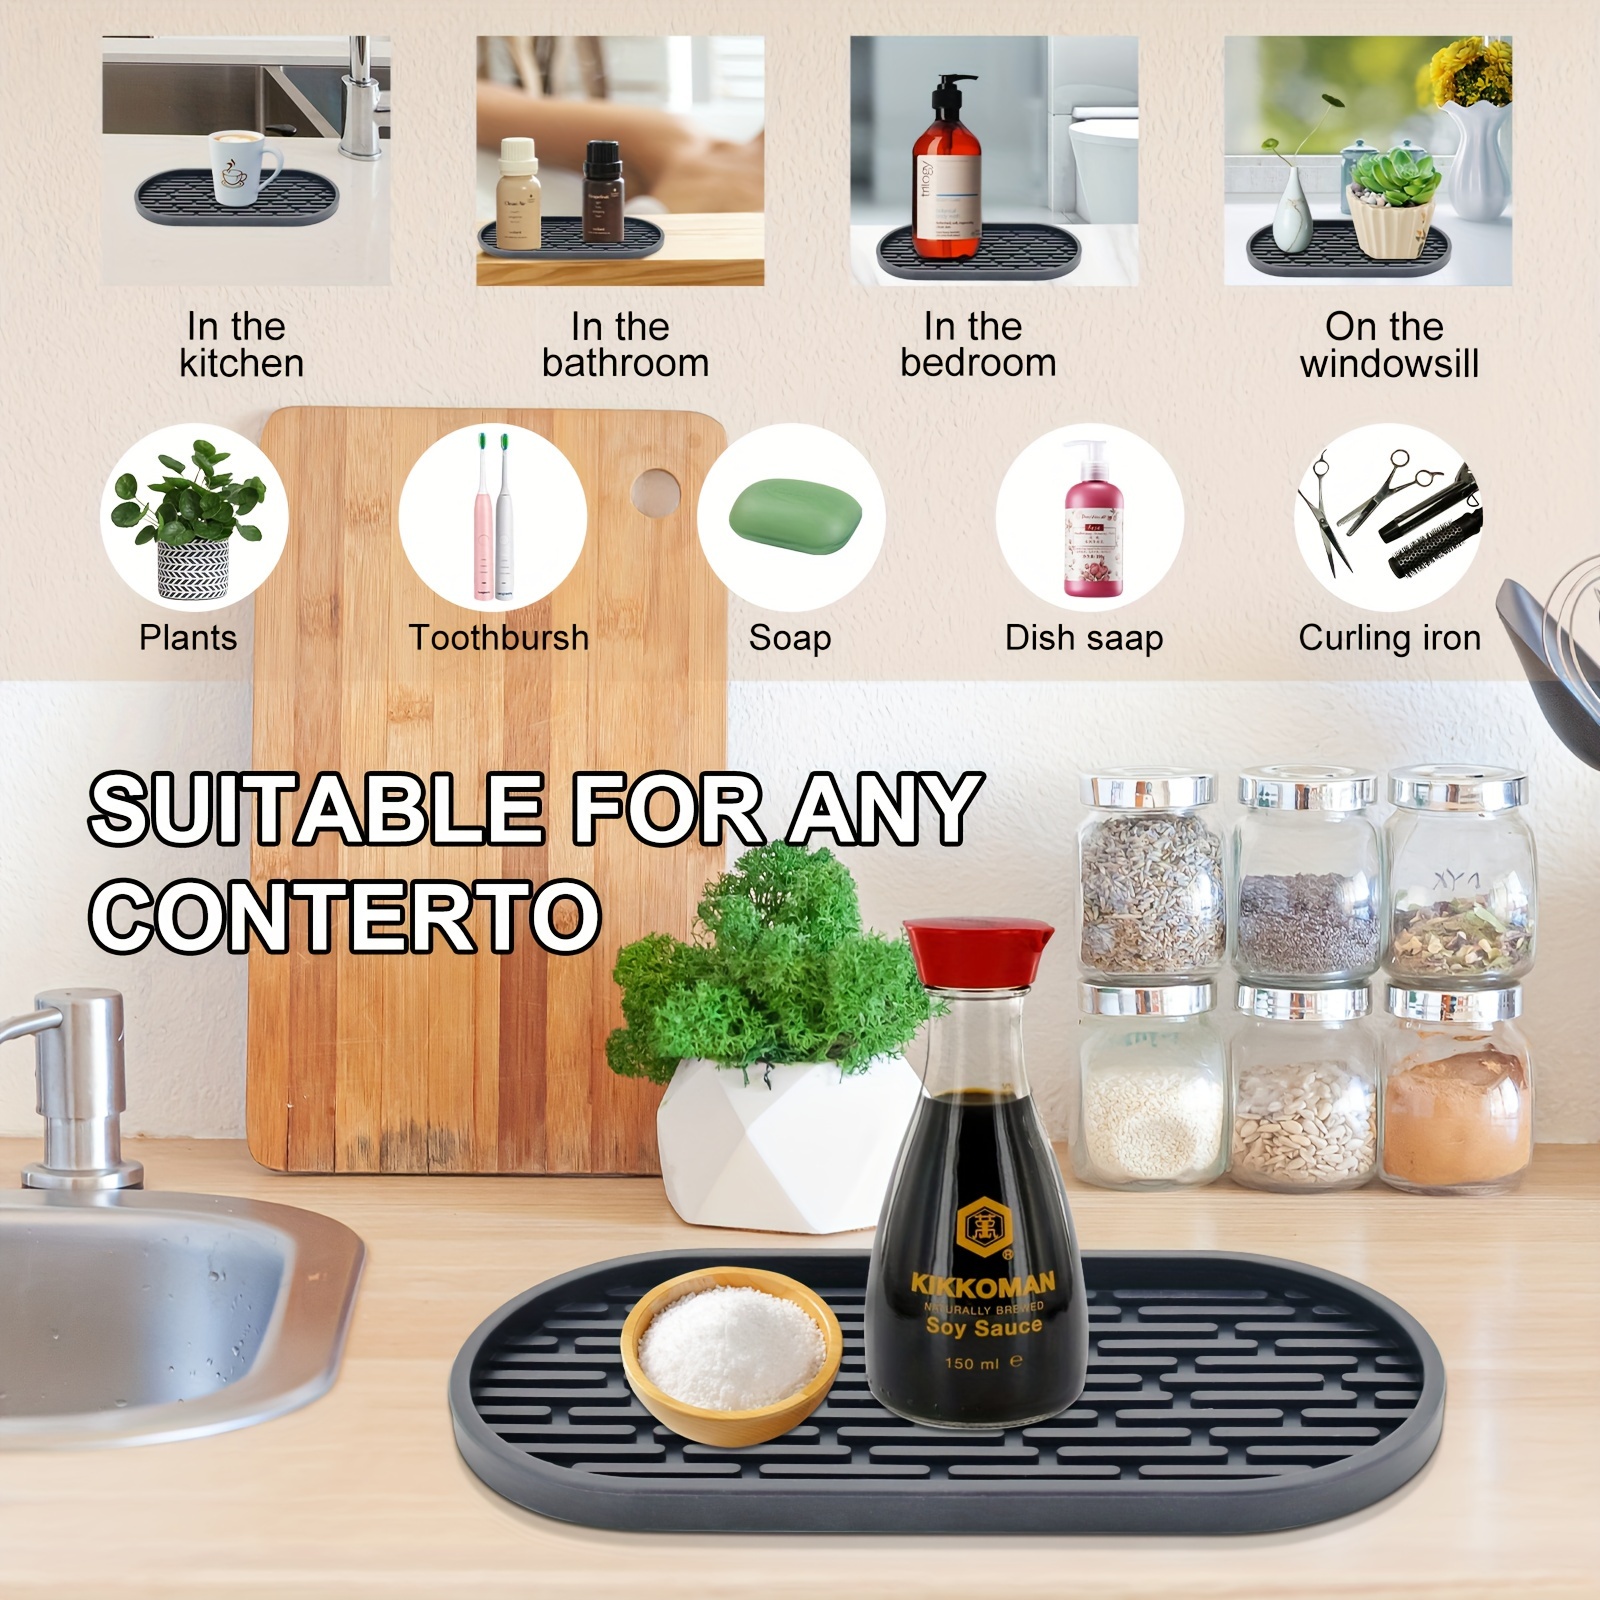 Home Essential Silicone Sink Tray (Asstd.)